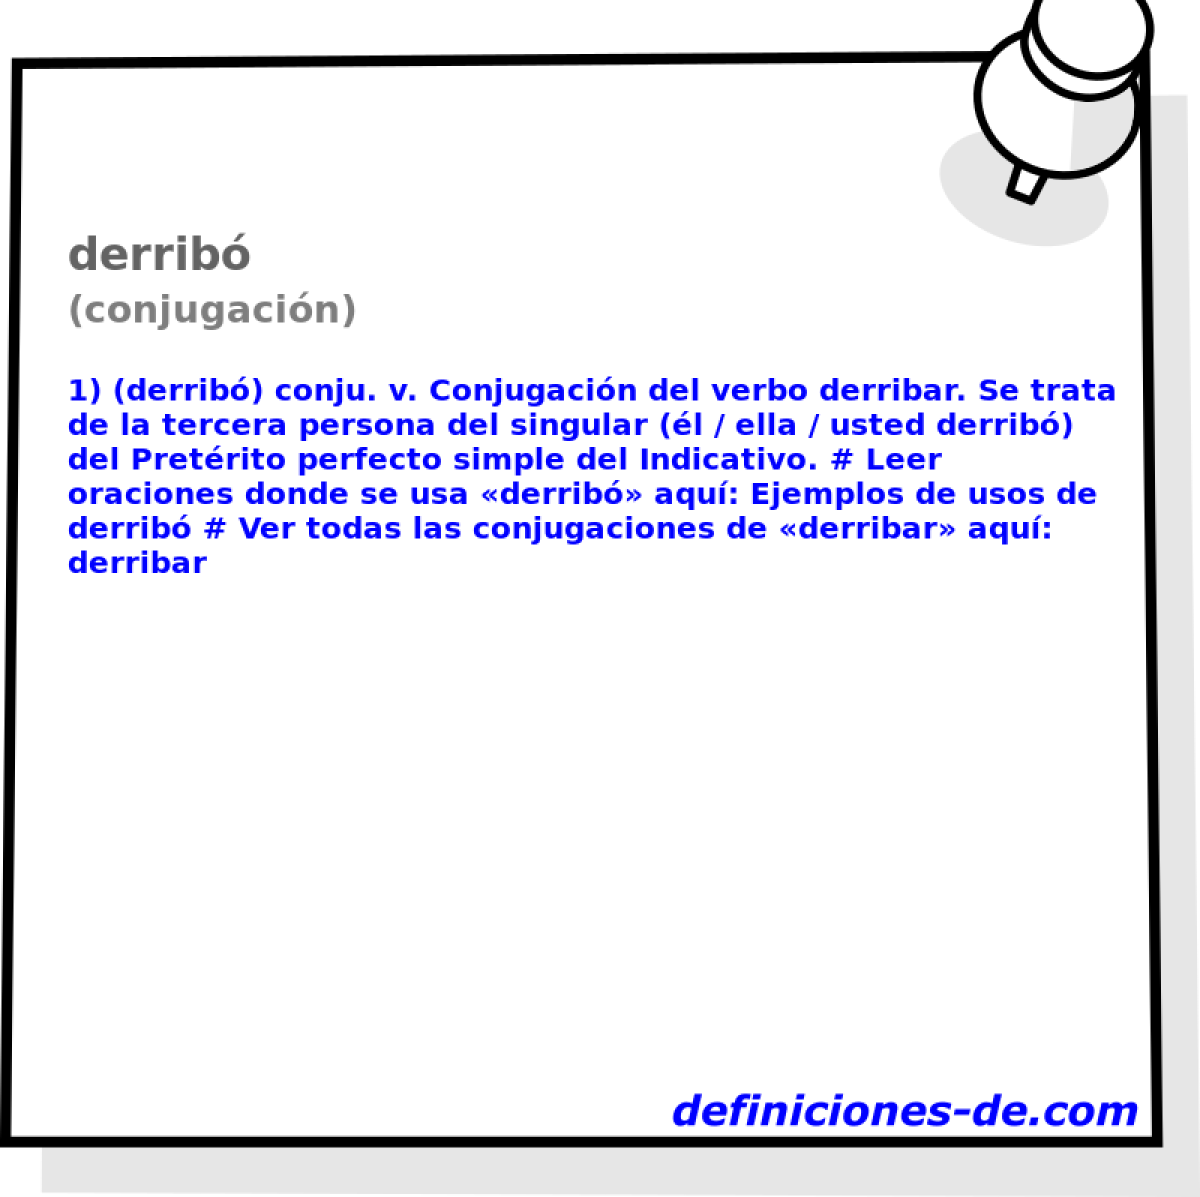 derrib (conjugacin)